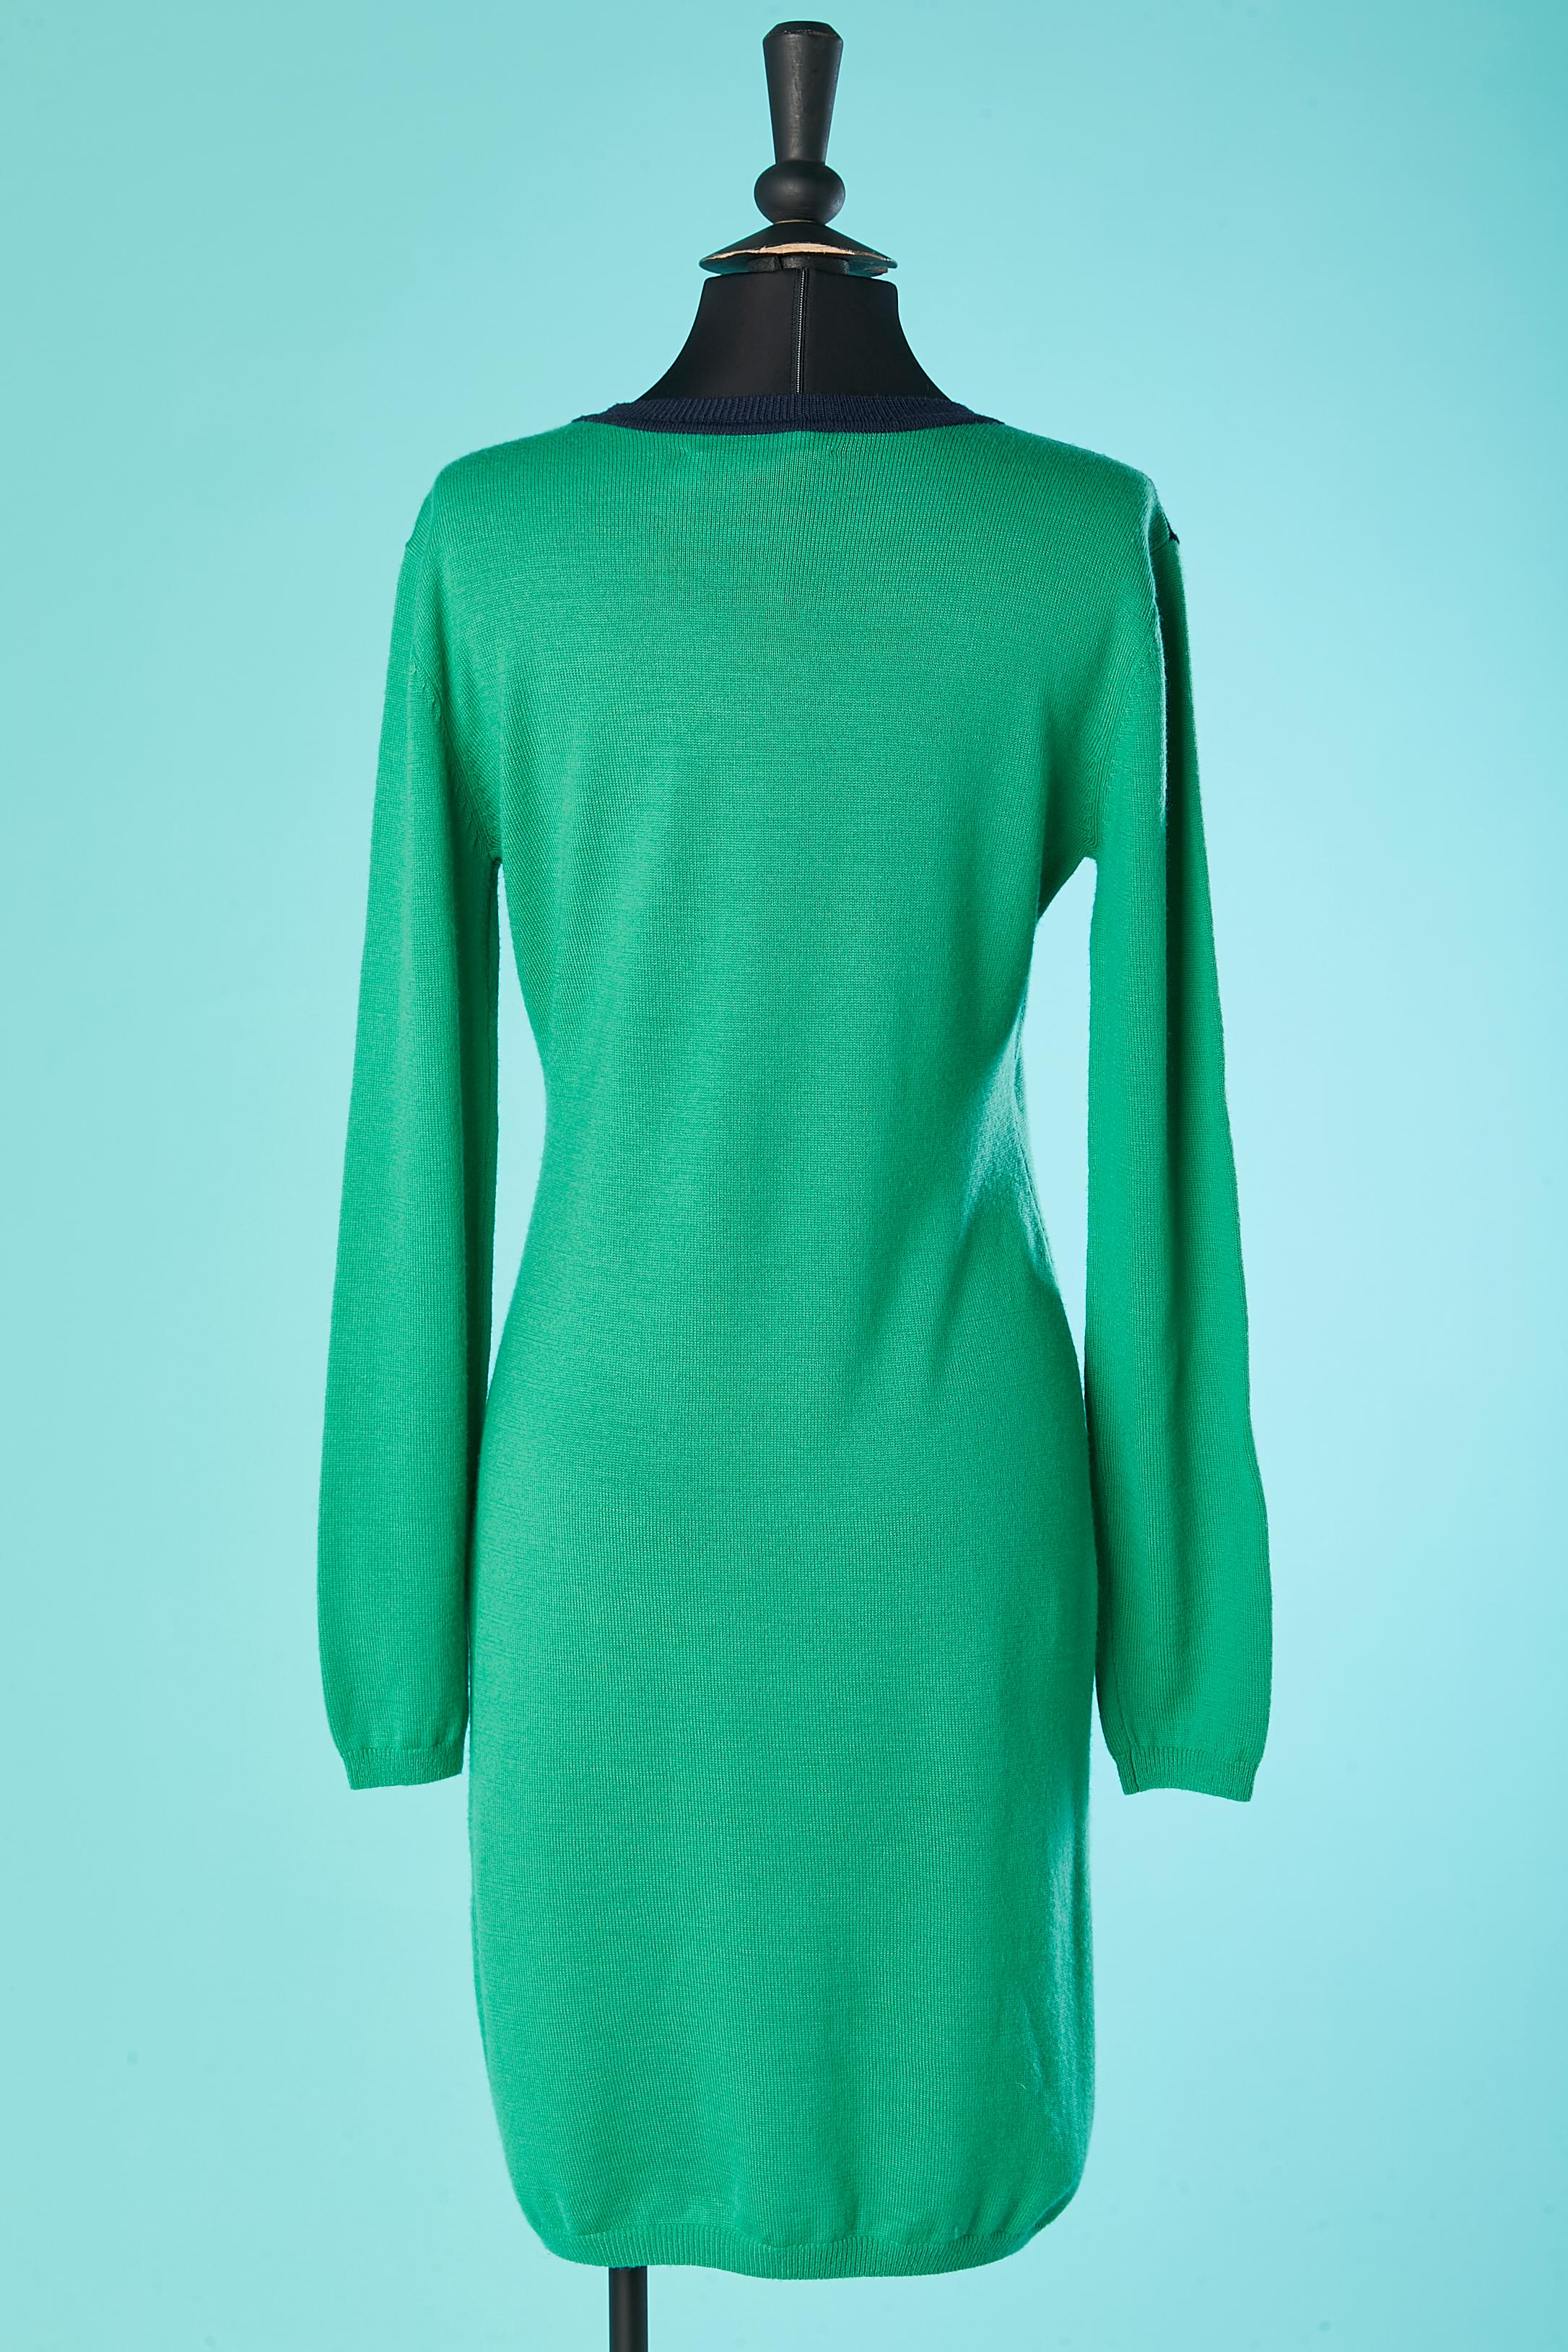 Women's Green knit dress with jacquard neckline JC de Castelbajac  For Sale